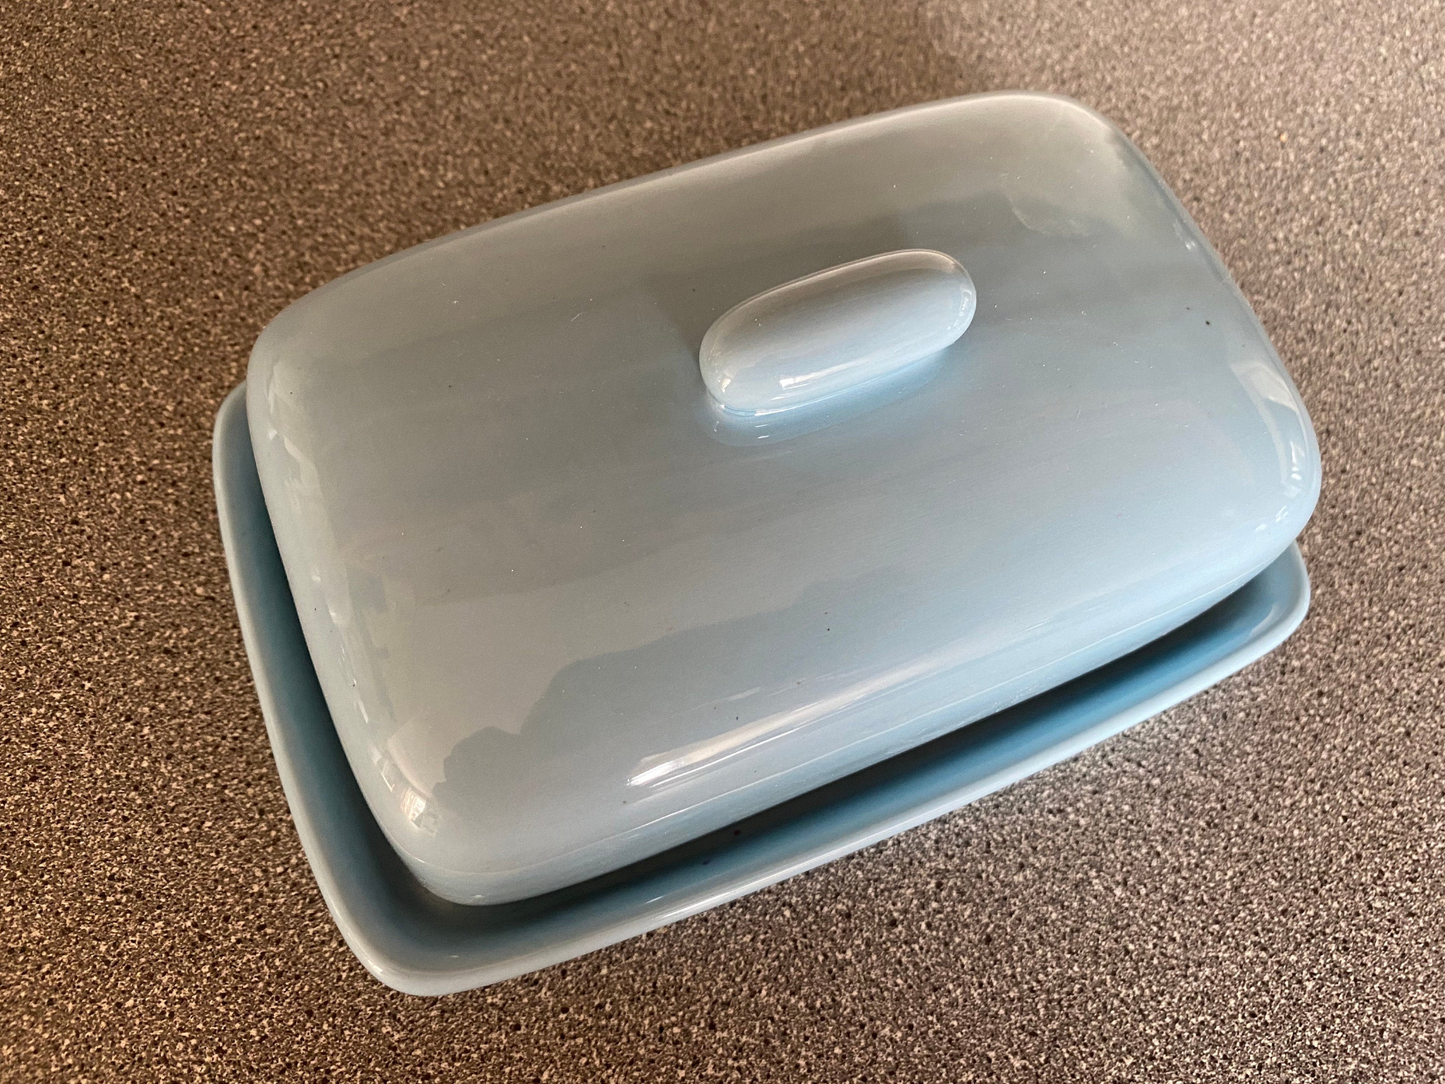 Butter Dish and Sugar Bowl Set - Powder Blue Glaze